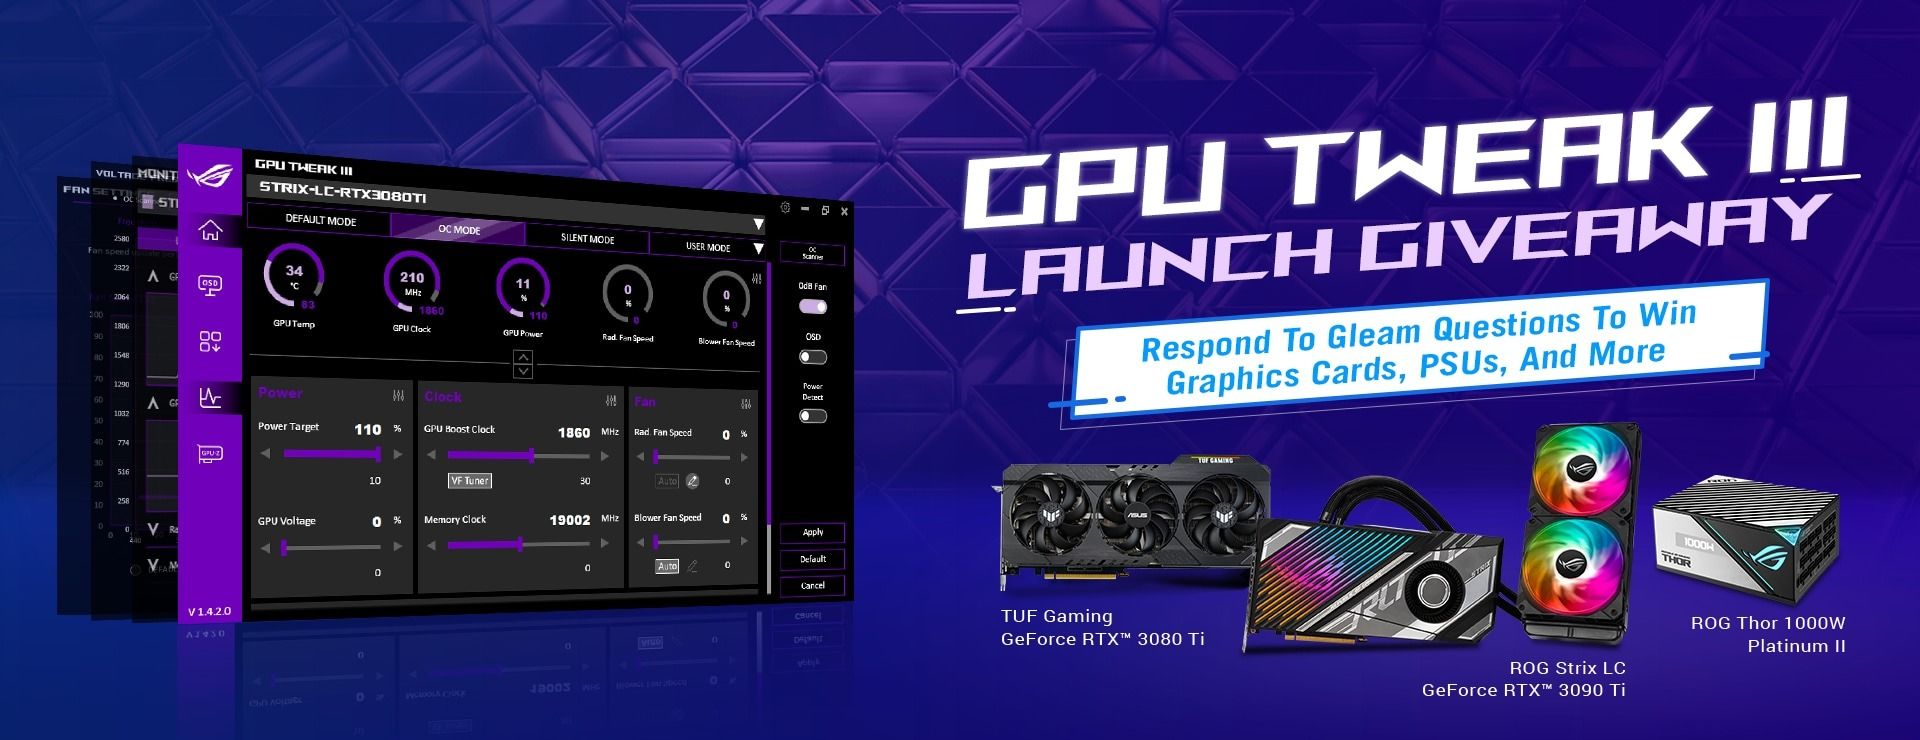 Asus ra mắt công cụ GPU Tweak III mới hỗ trợ GPU AMD và NVIDIA